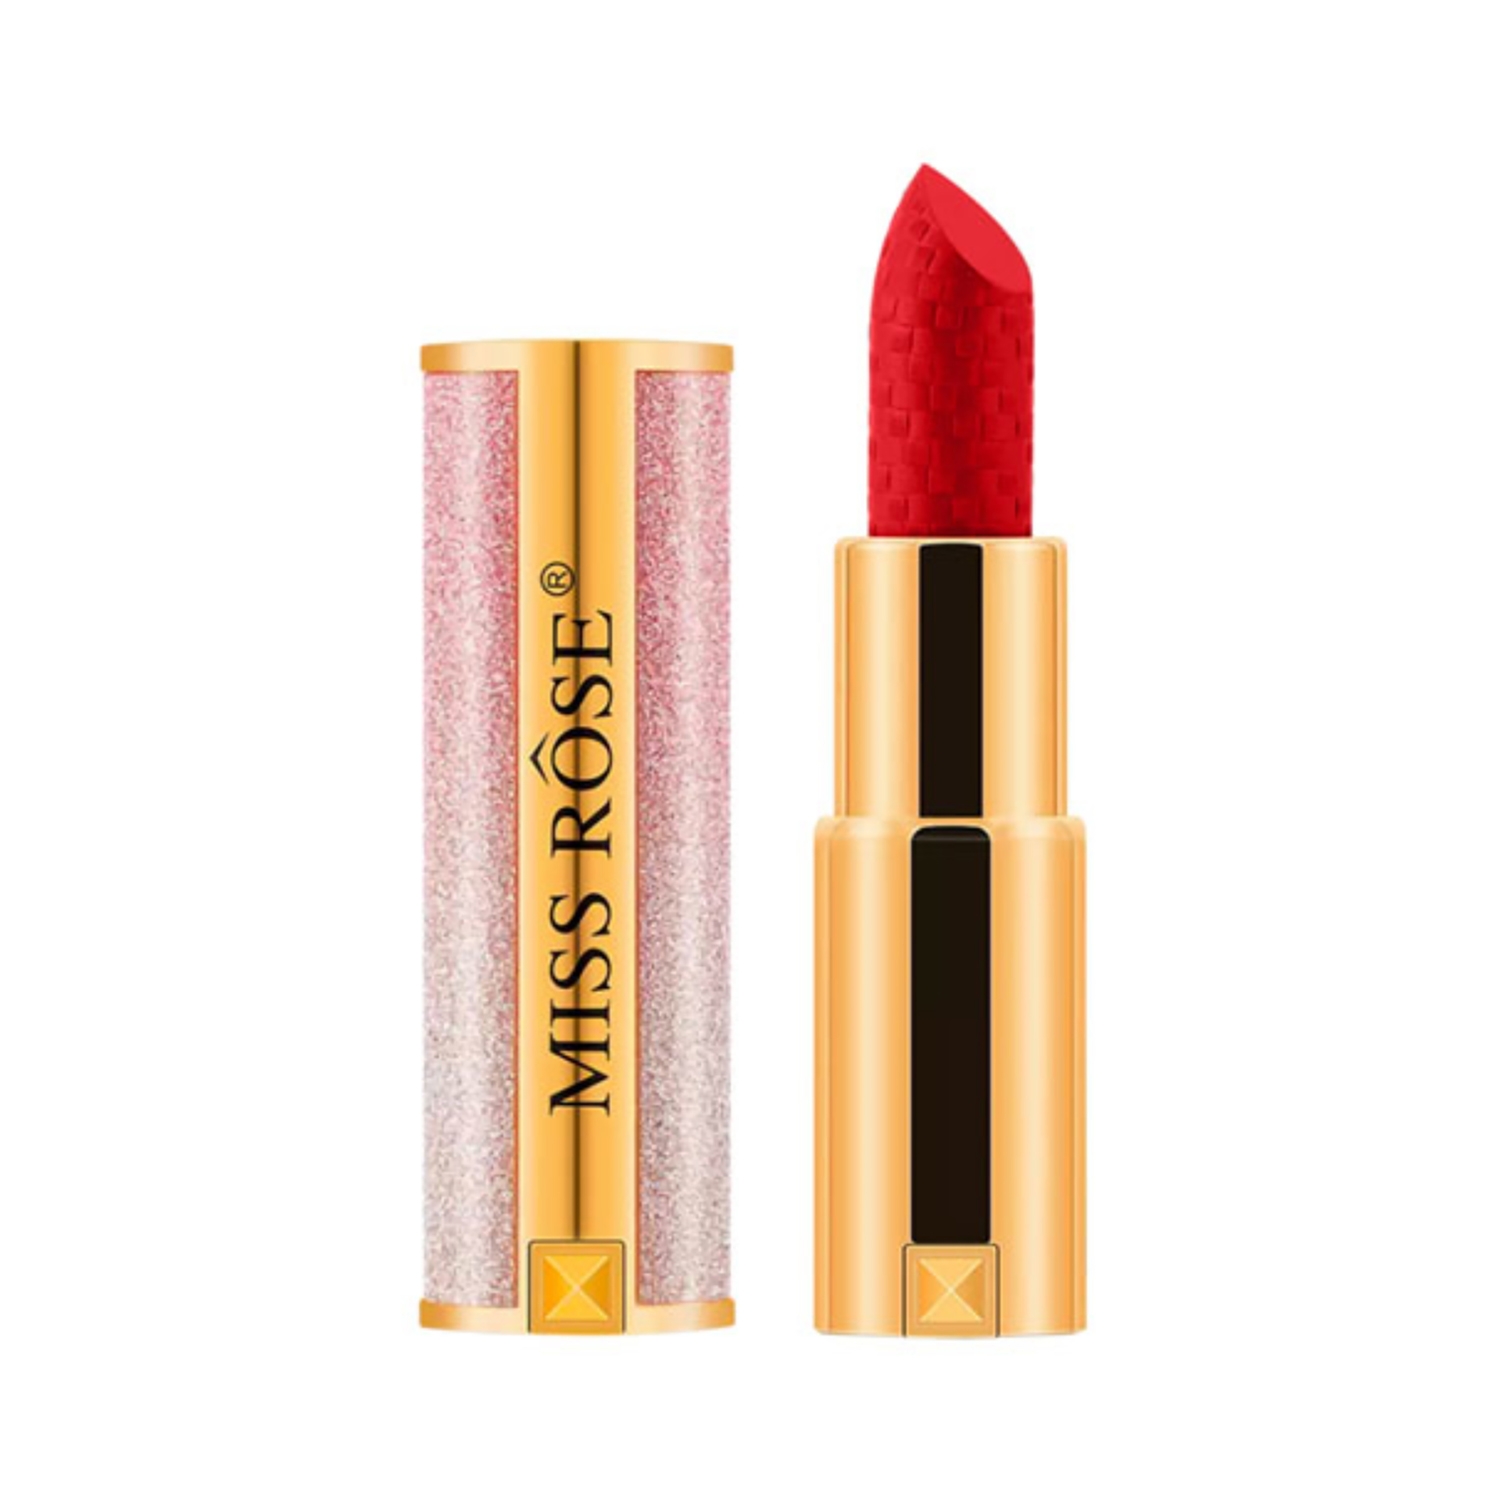 Miss Rose Professional Smudge Proof Creamy Matte Lipstick - S7 (3g)